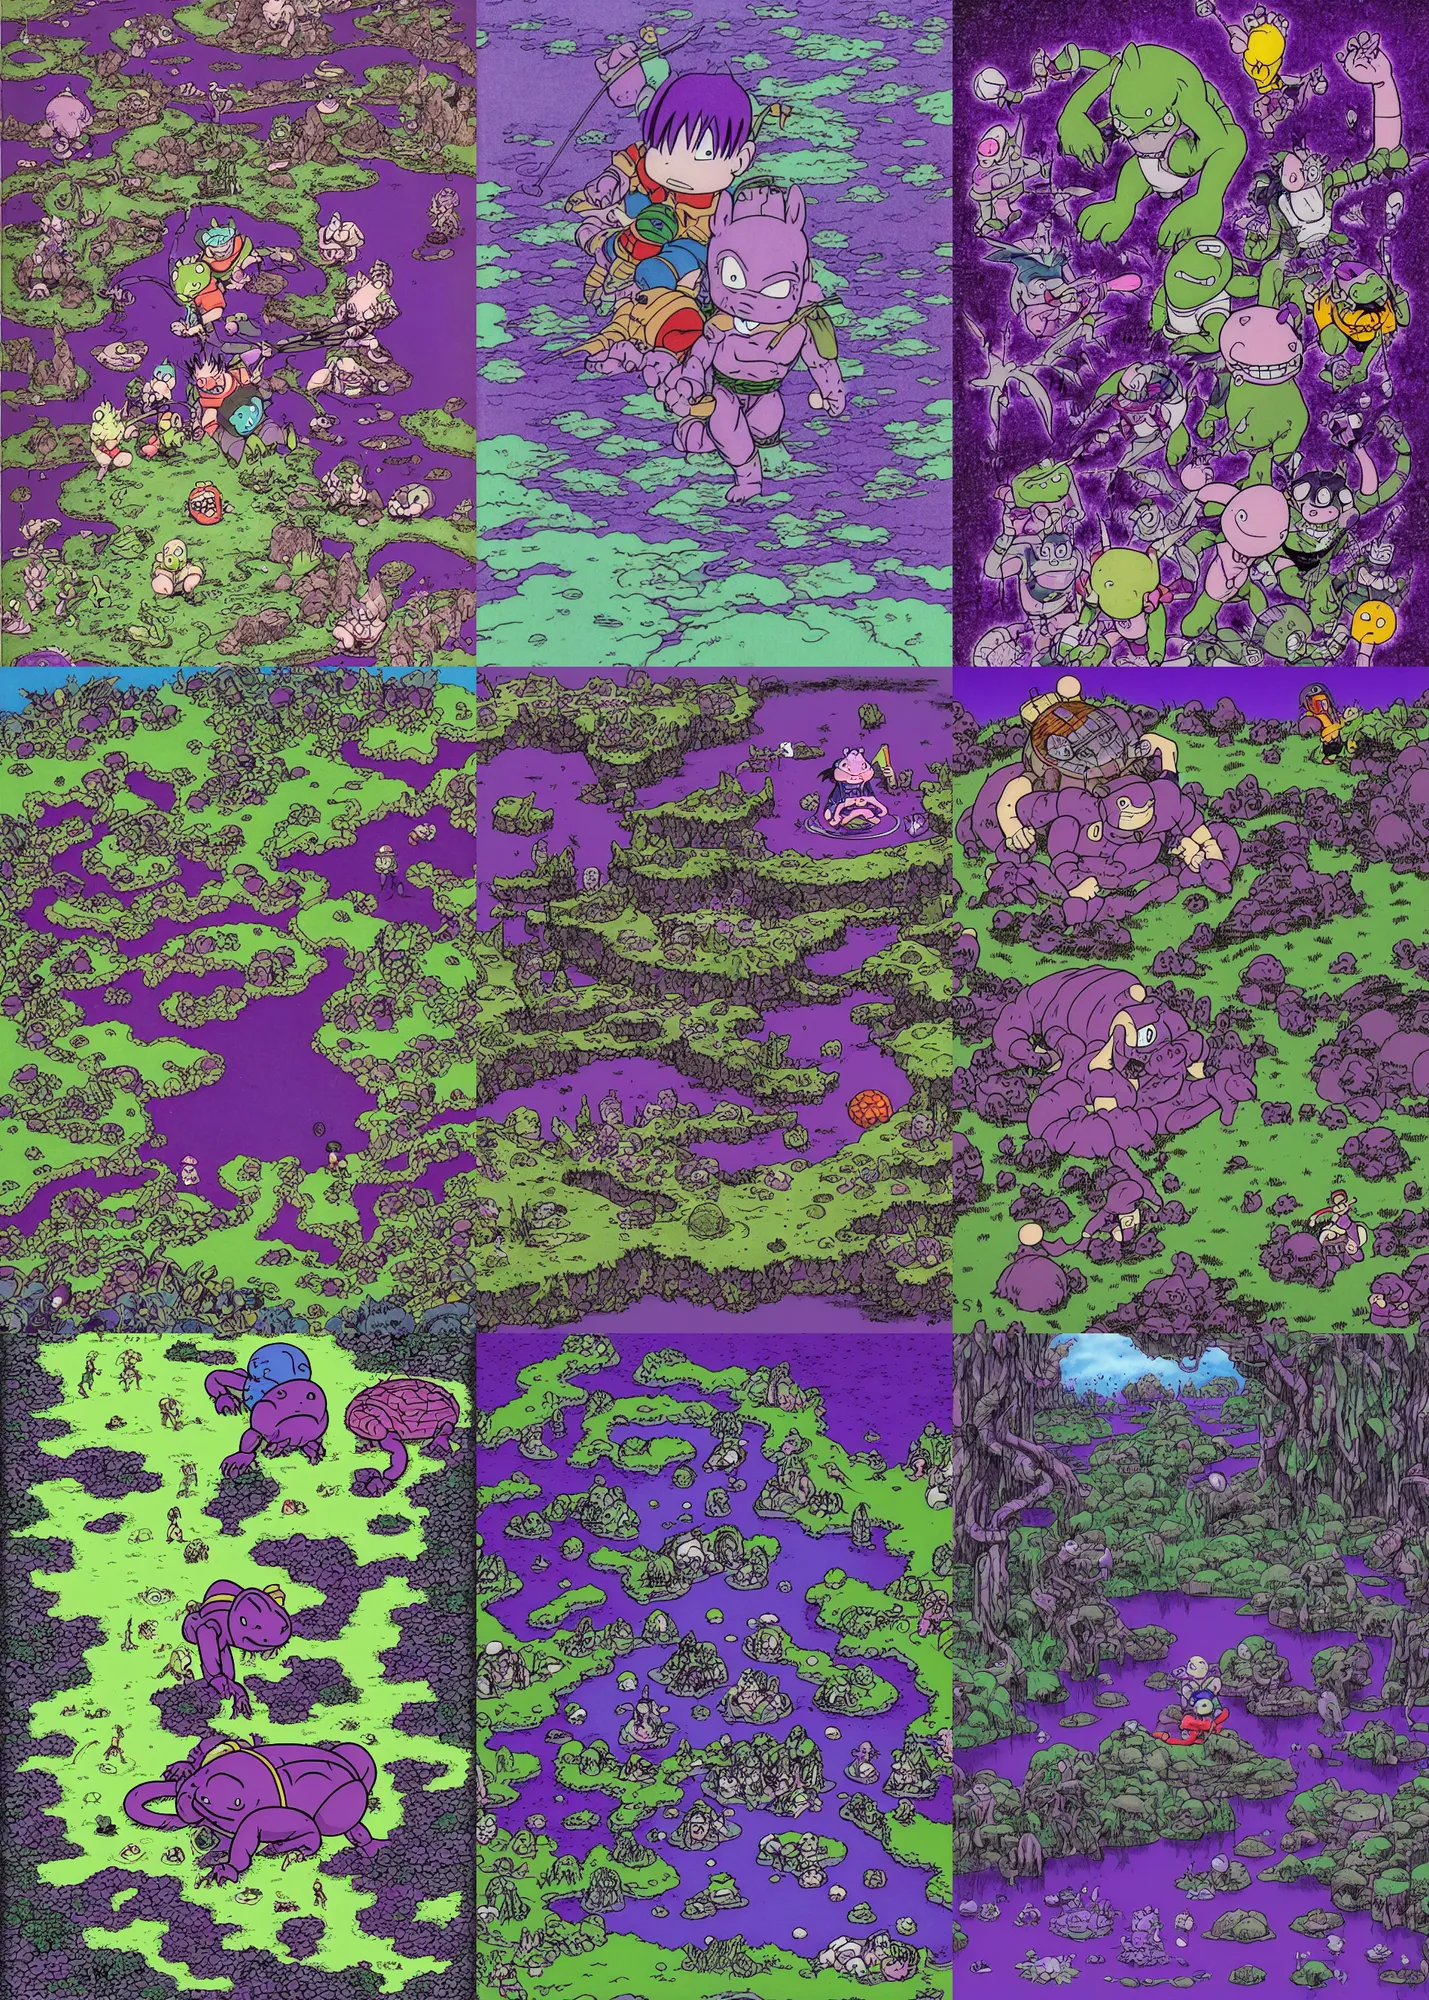 Prompt: dark purple swamp, by akira toriyama